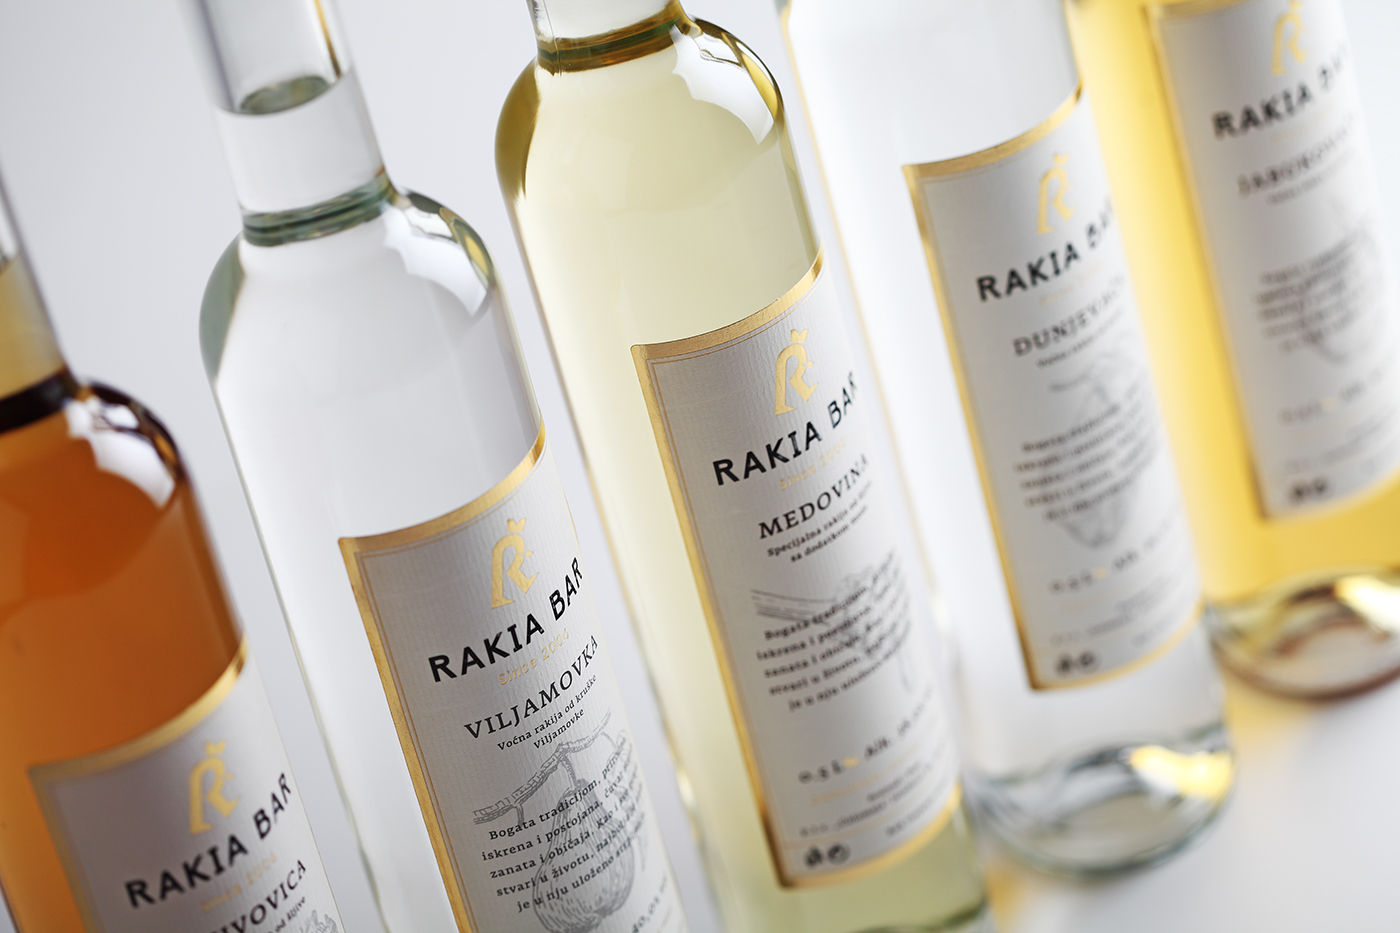 rakia rakija Brandy Spirits alcohol honey Rakia Bar belgrade Serbia drinks bottle design luxury packaging Coba studio coba and associates